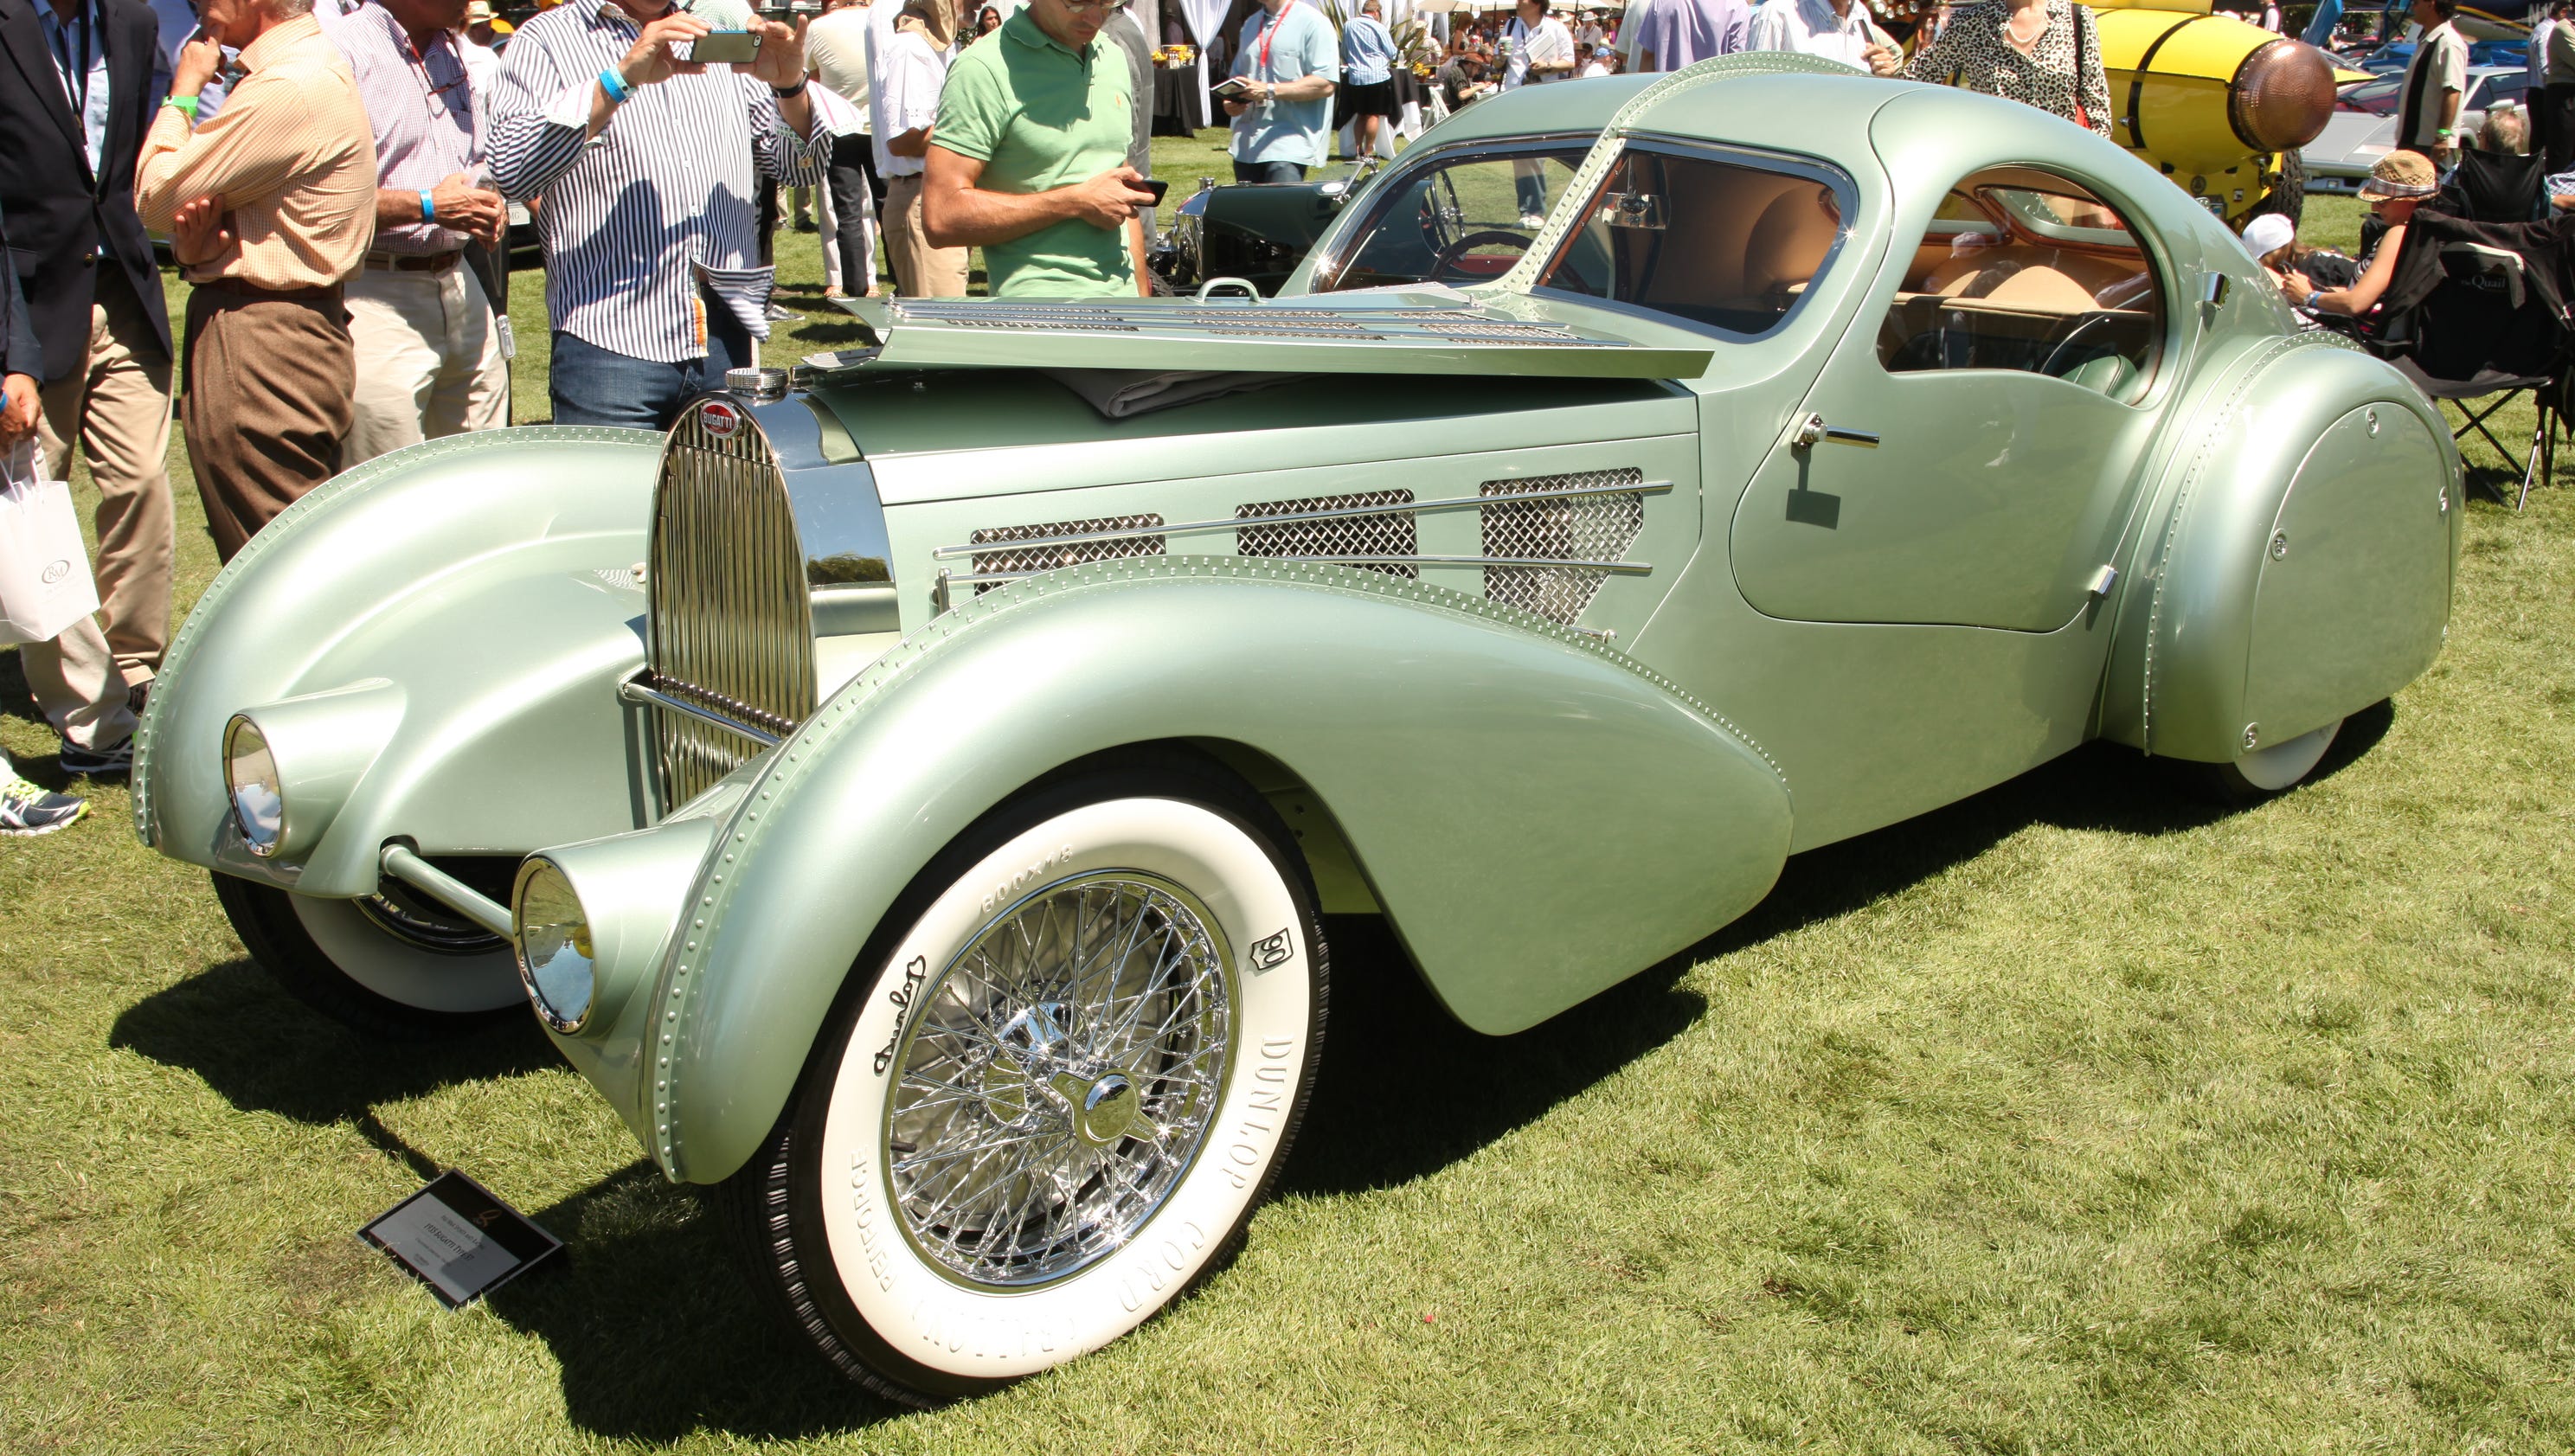 Show Us Your Car: A famous 1935 Bugatti is reborn